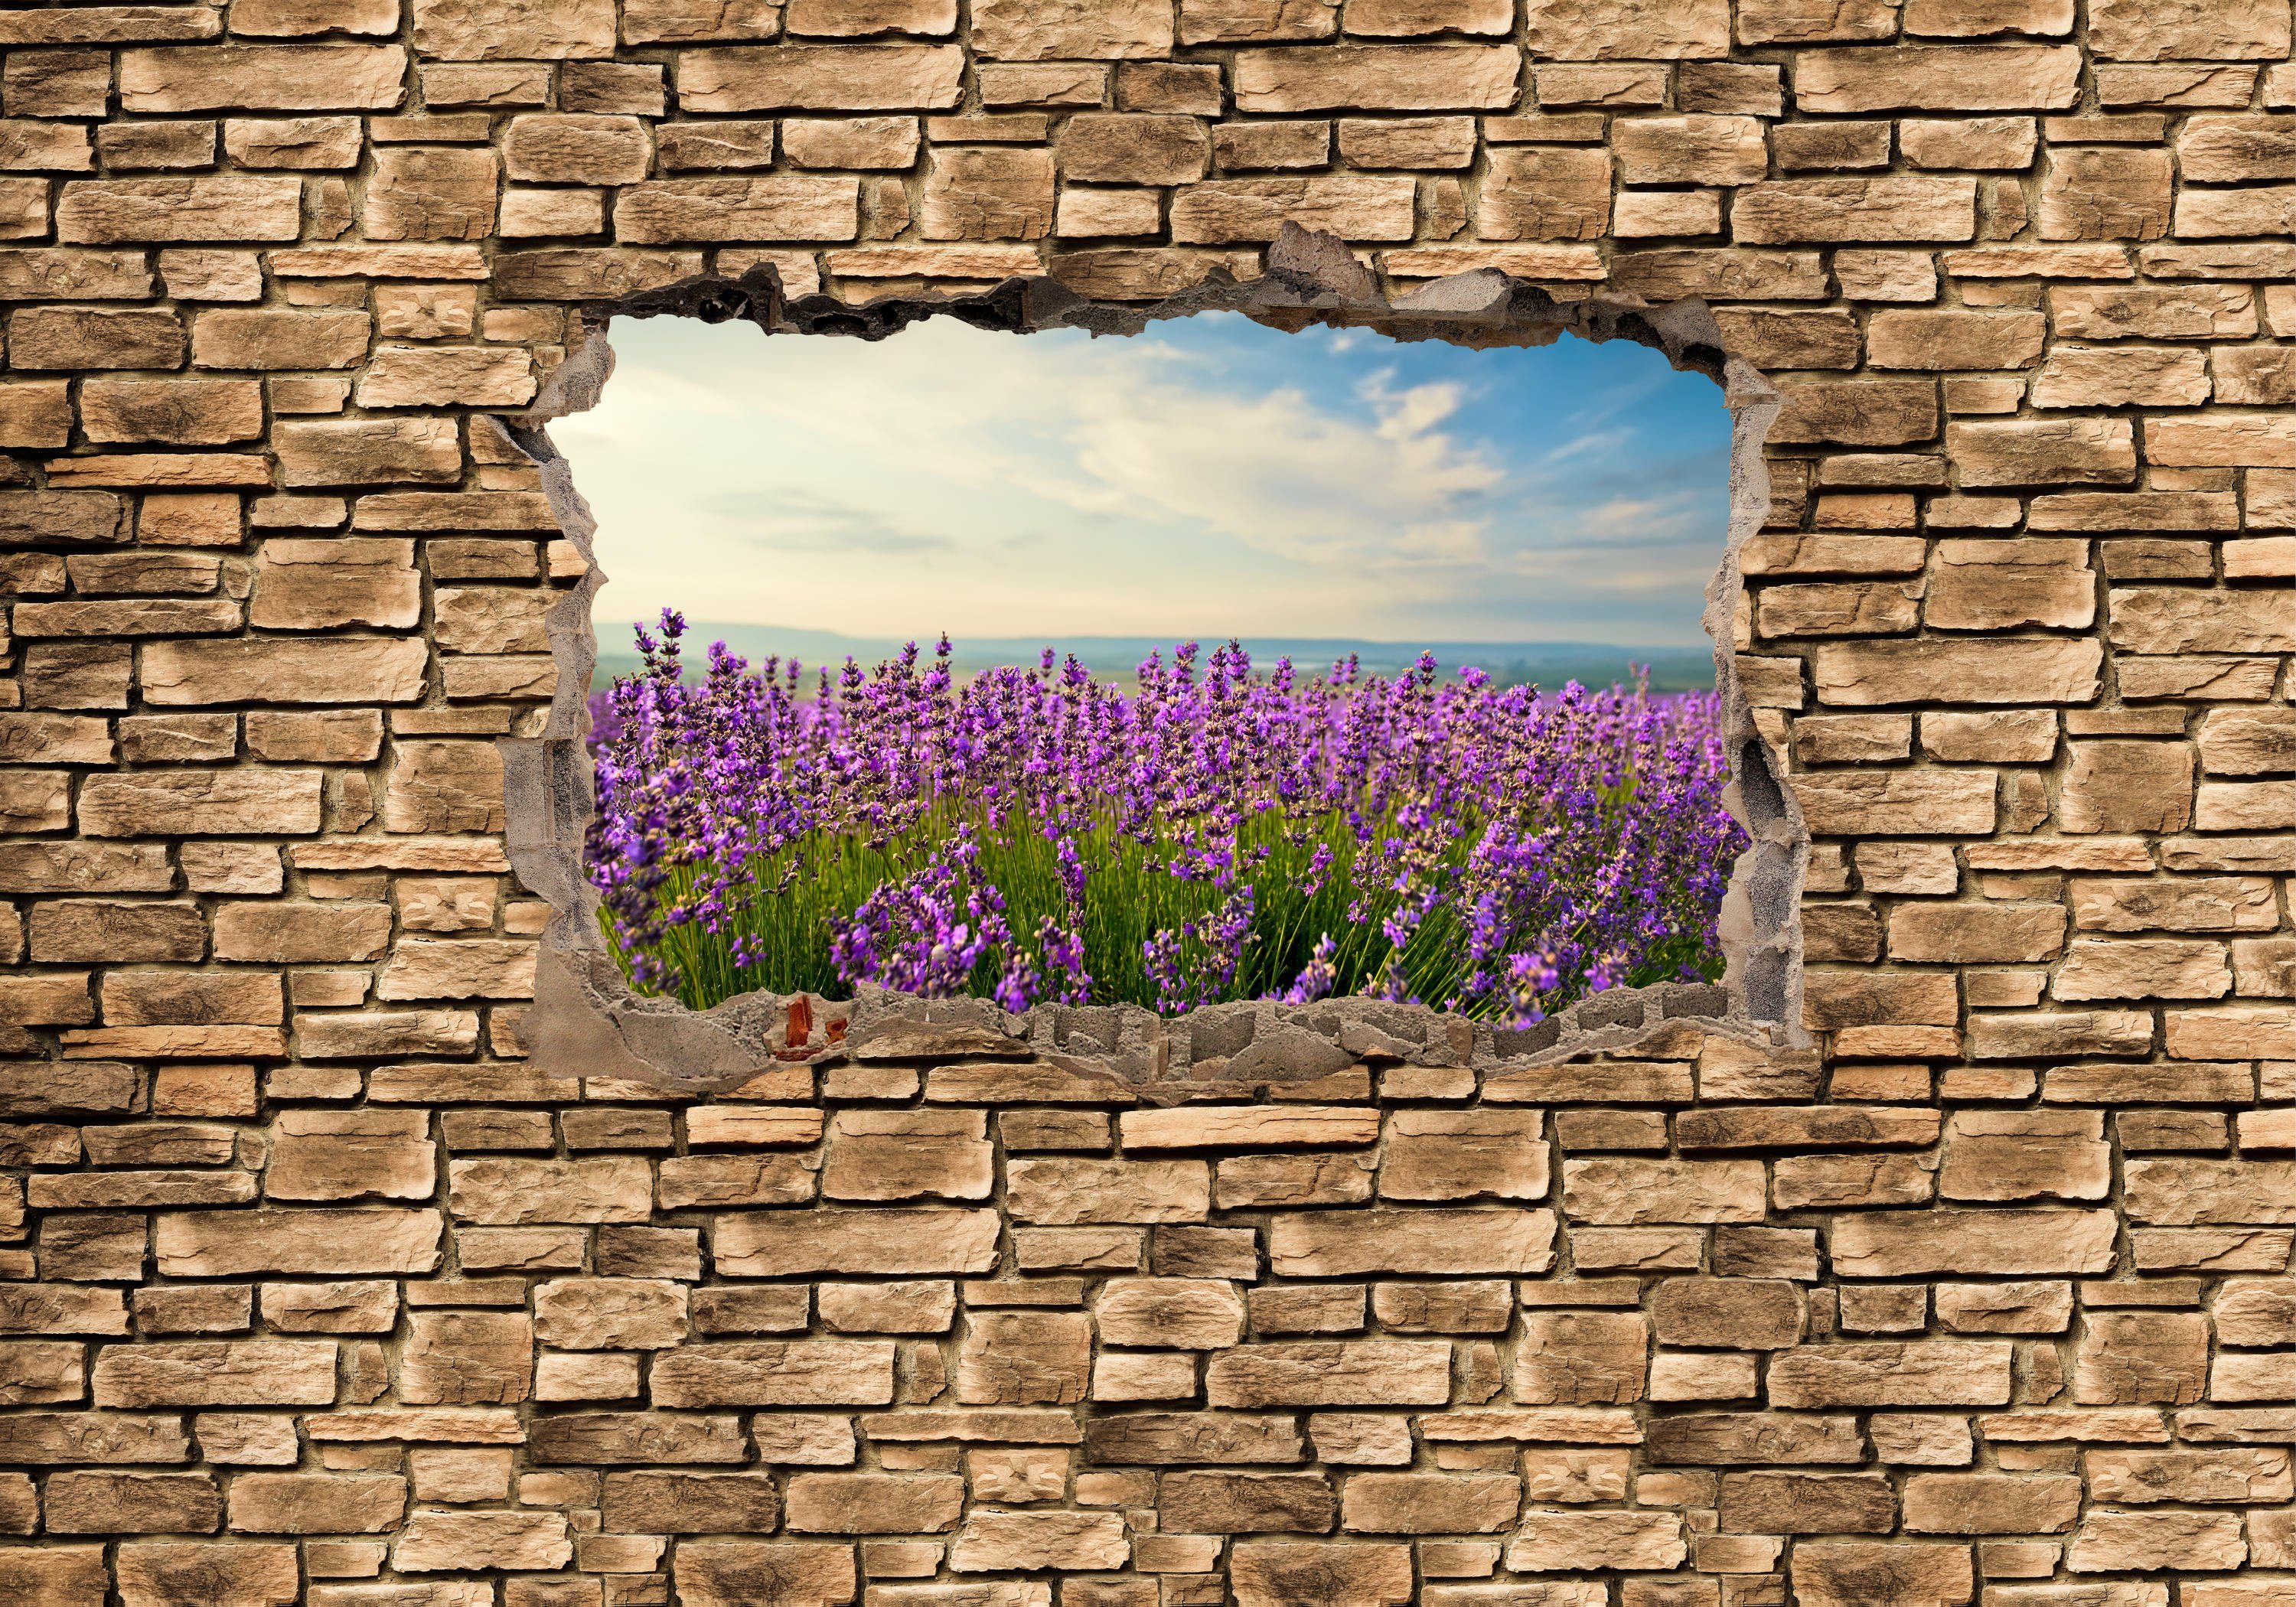 wandmotiv24 Fototapete 3D Lavendelfeld am Meer - Steinmauer, glatt, Wandtapete, Motivtapete, matt, Vliestapete